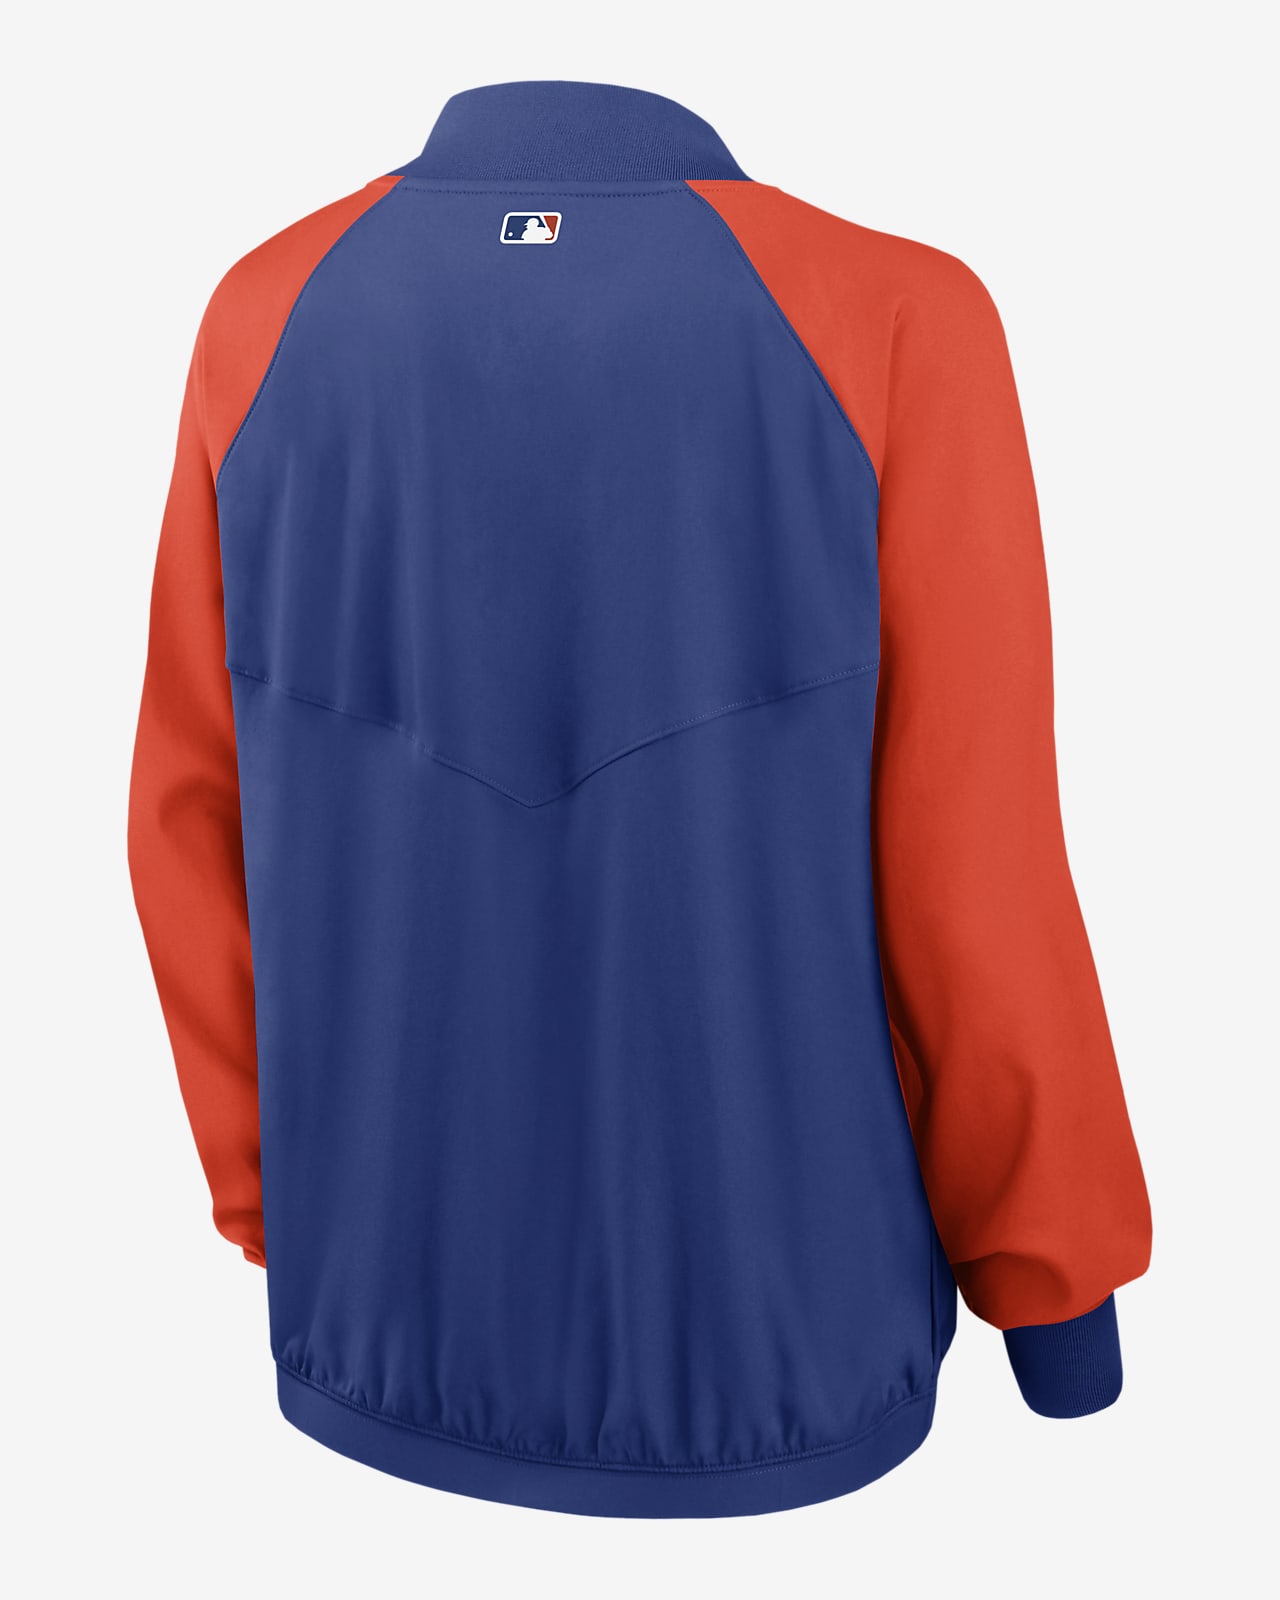 Houston Astros women's jacket -These go for $90 - Depop